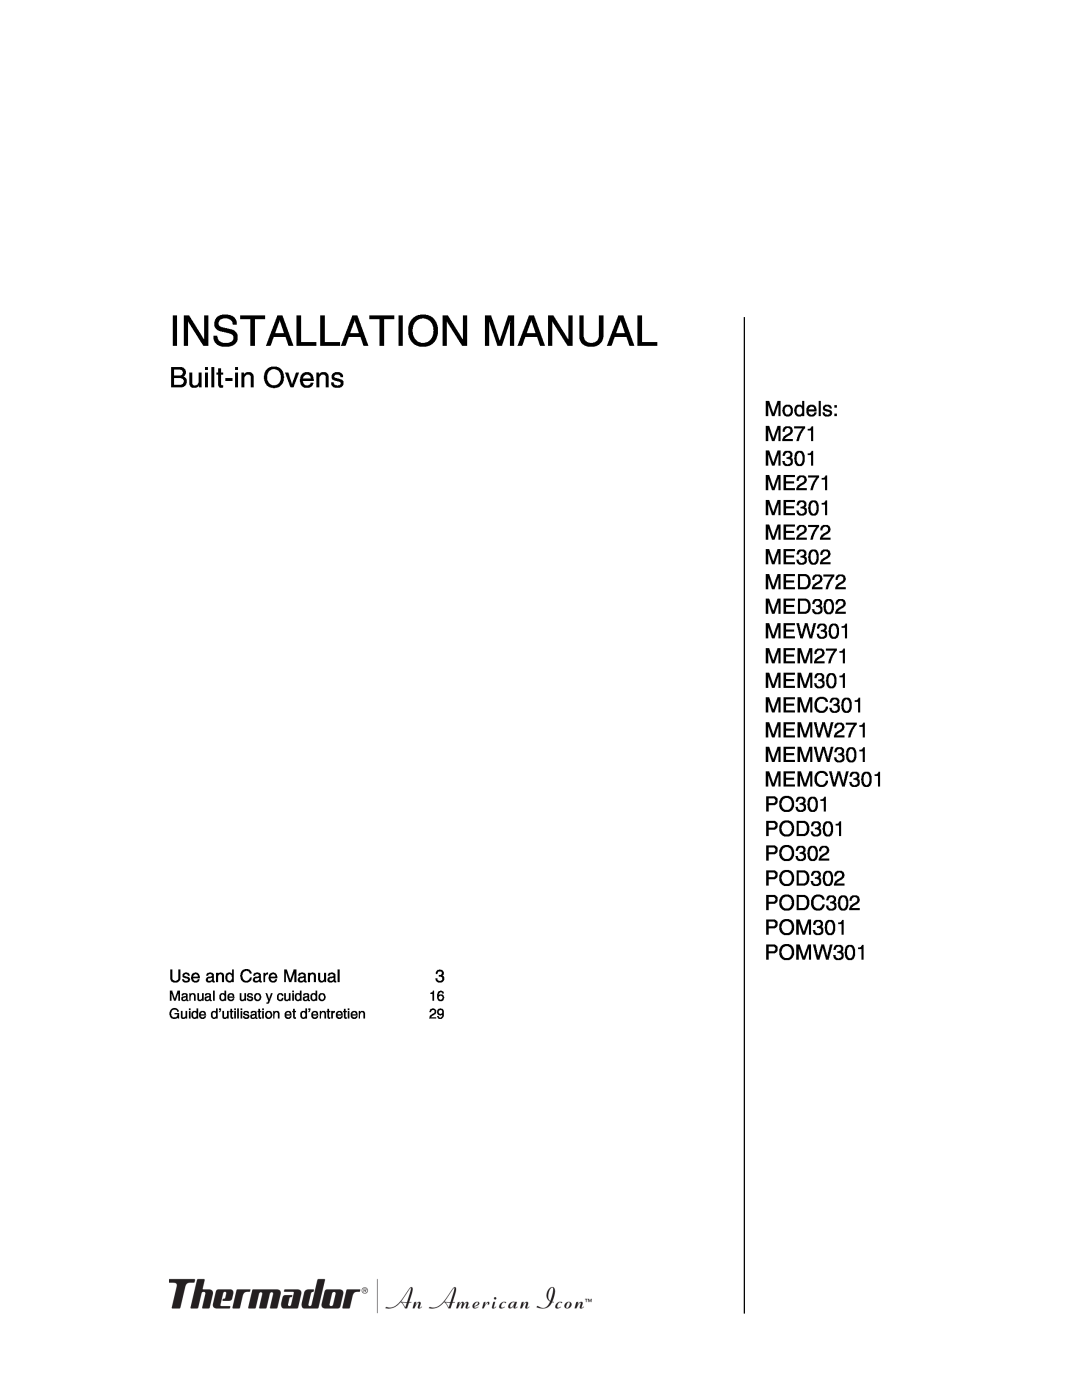 Thermador MEMW301, MEW301 installation manual Models M271 M301 ME271 ME301 ME272 ME302 MED272, PODC302 POM301 POMW301 